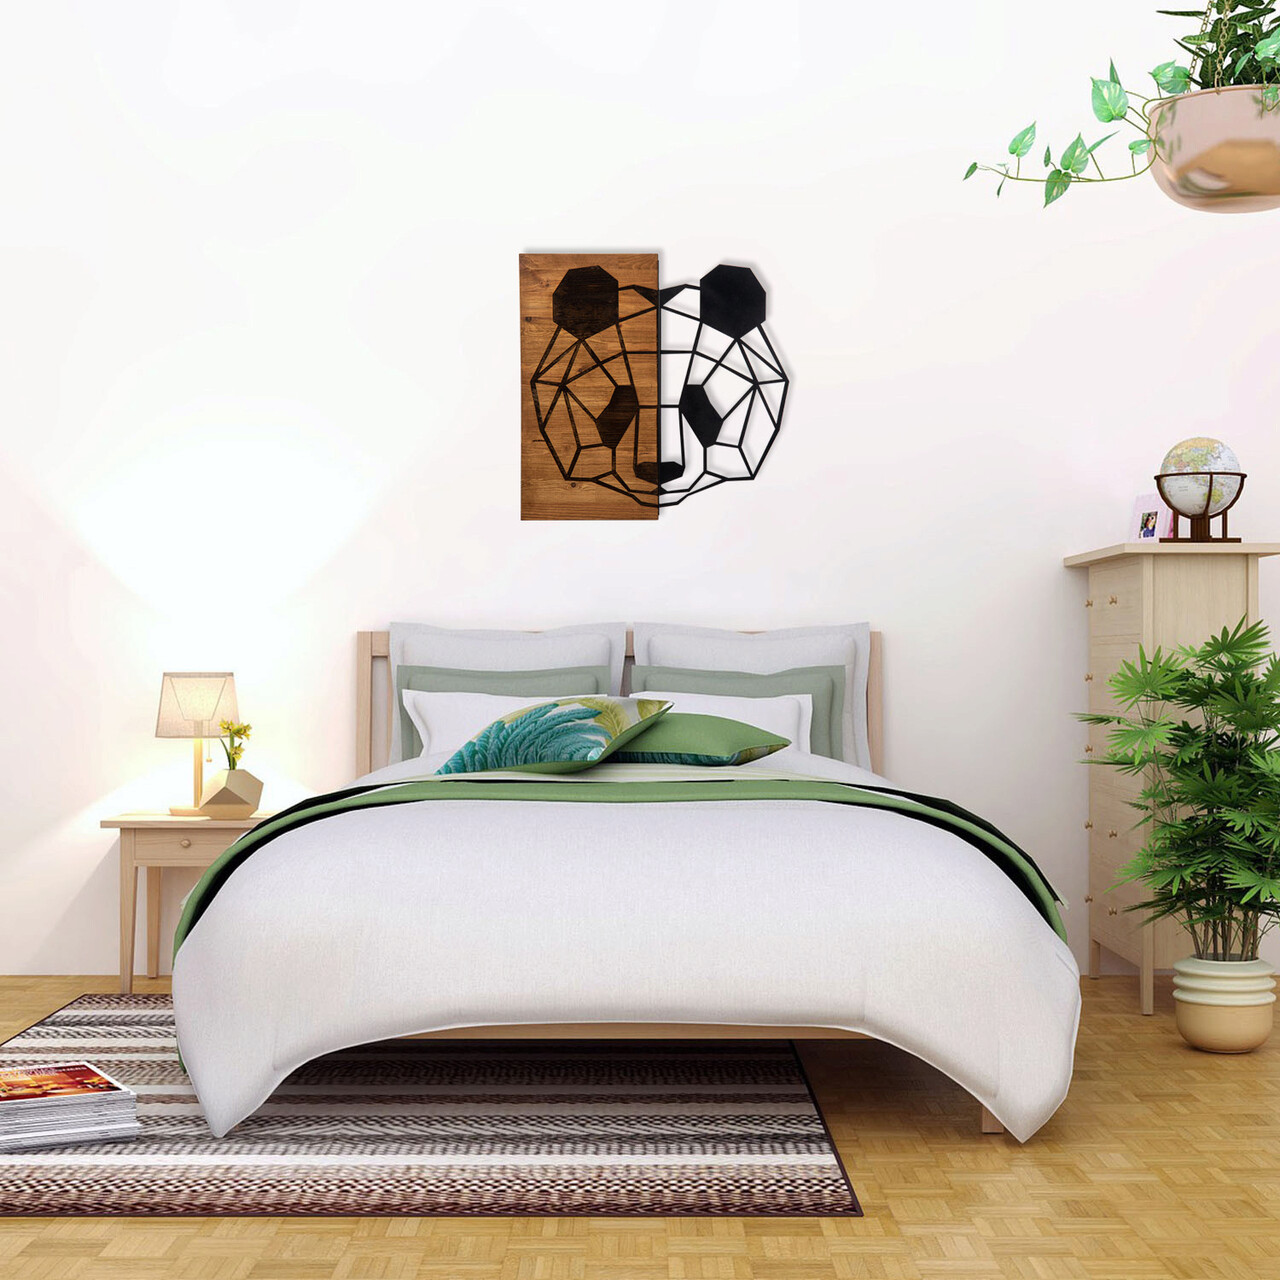 Decoratiune de perete, Panda, Metal, Dimensiune: 70 x 67 cm, Nuc negru